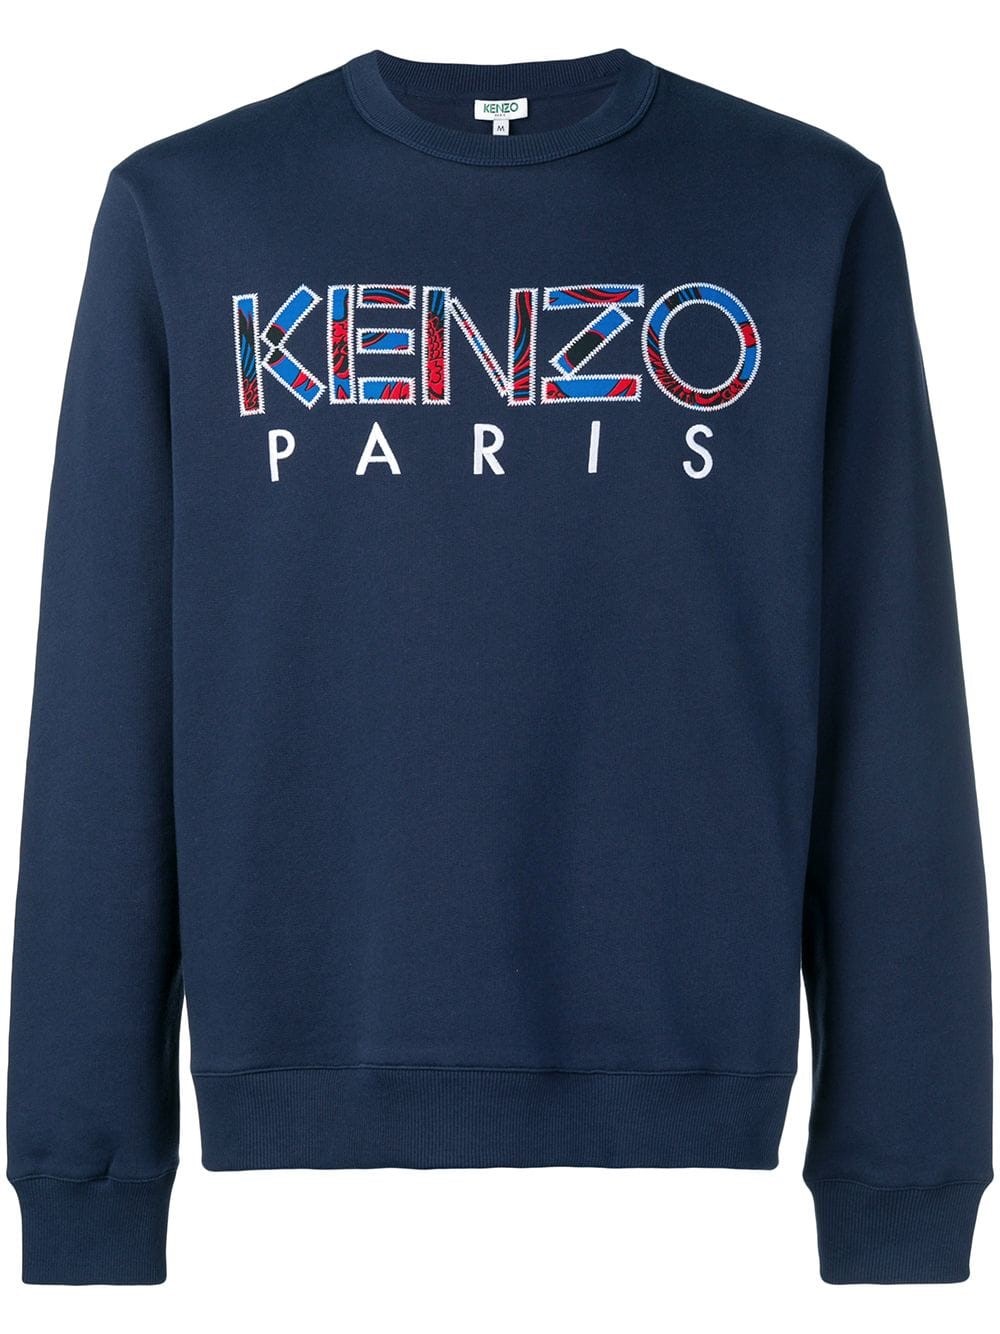 kenzo KENZO PARIS SWEATSHIRT available 